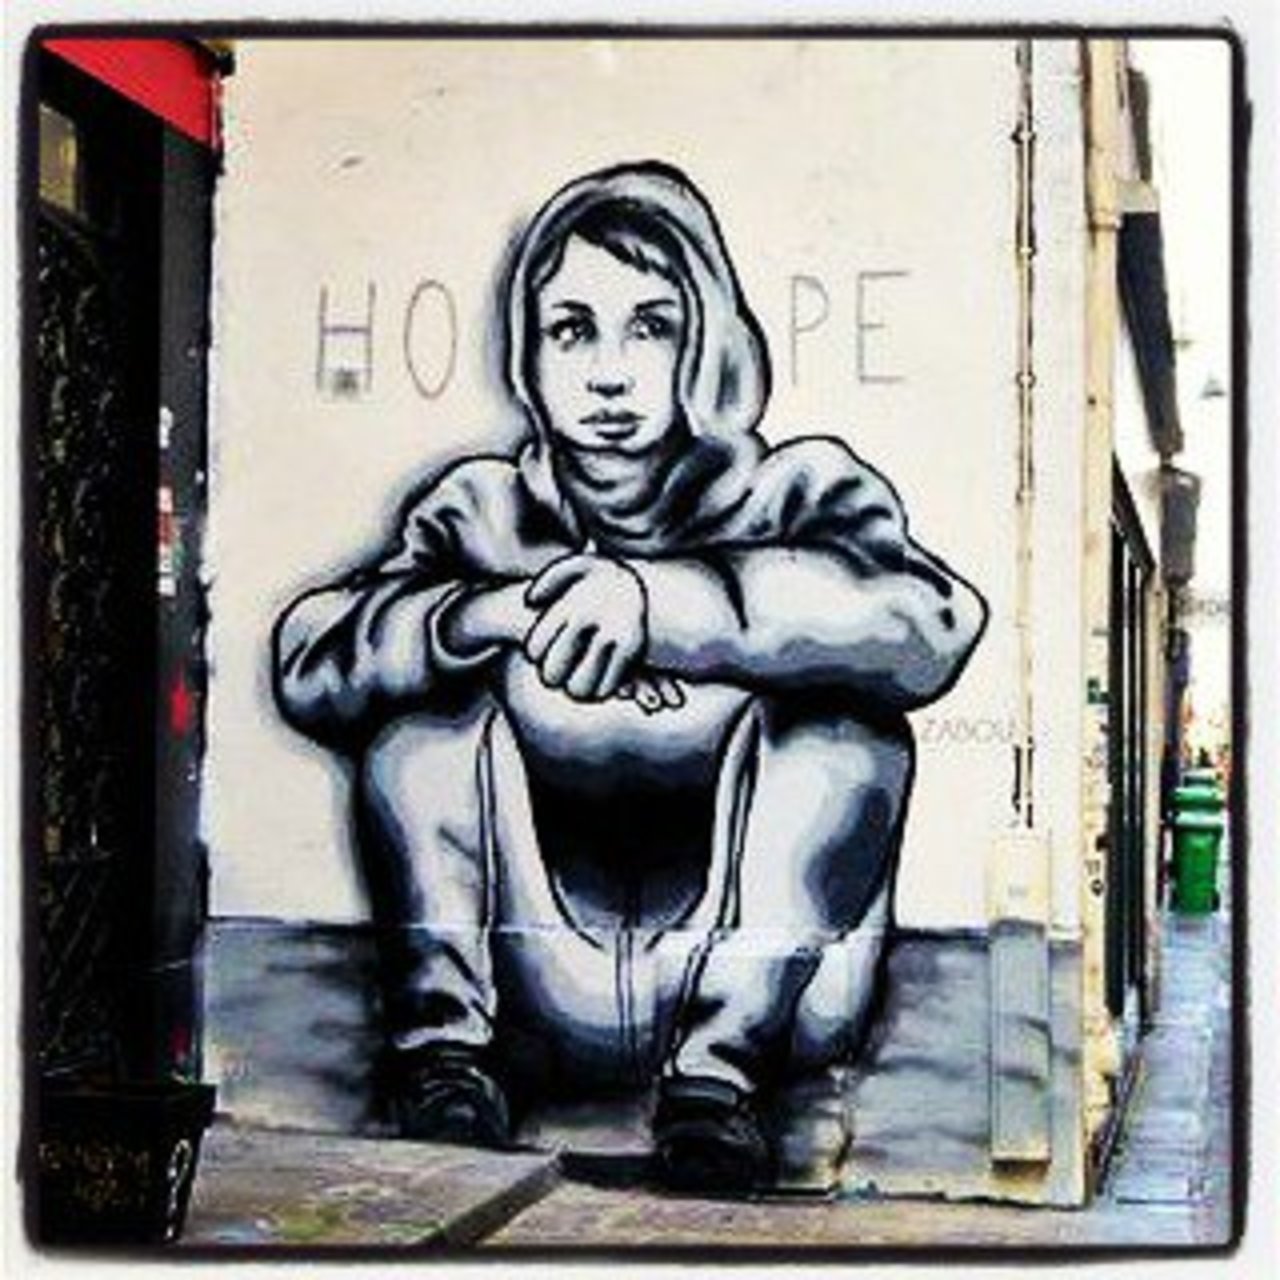 #Paris #graffiti photo by @senyorerre http://ift.tt/1MK3xrA #StreetArt https://t.co/aZRMk18JKs